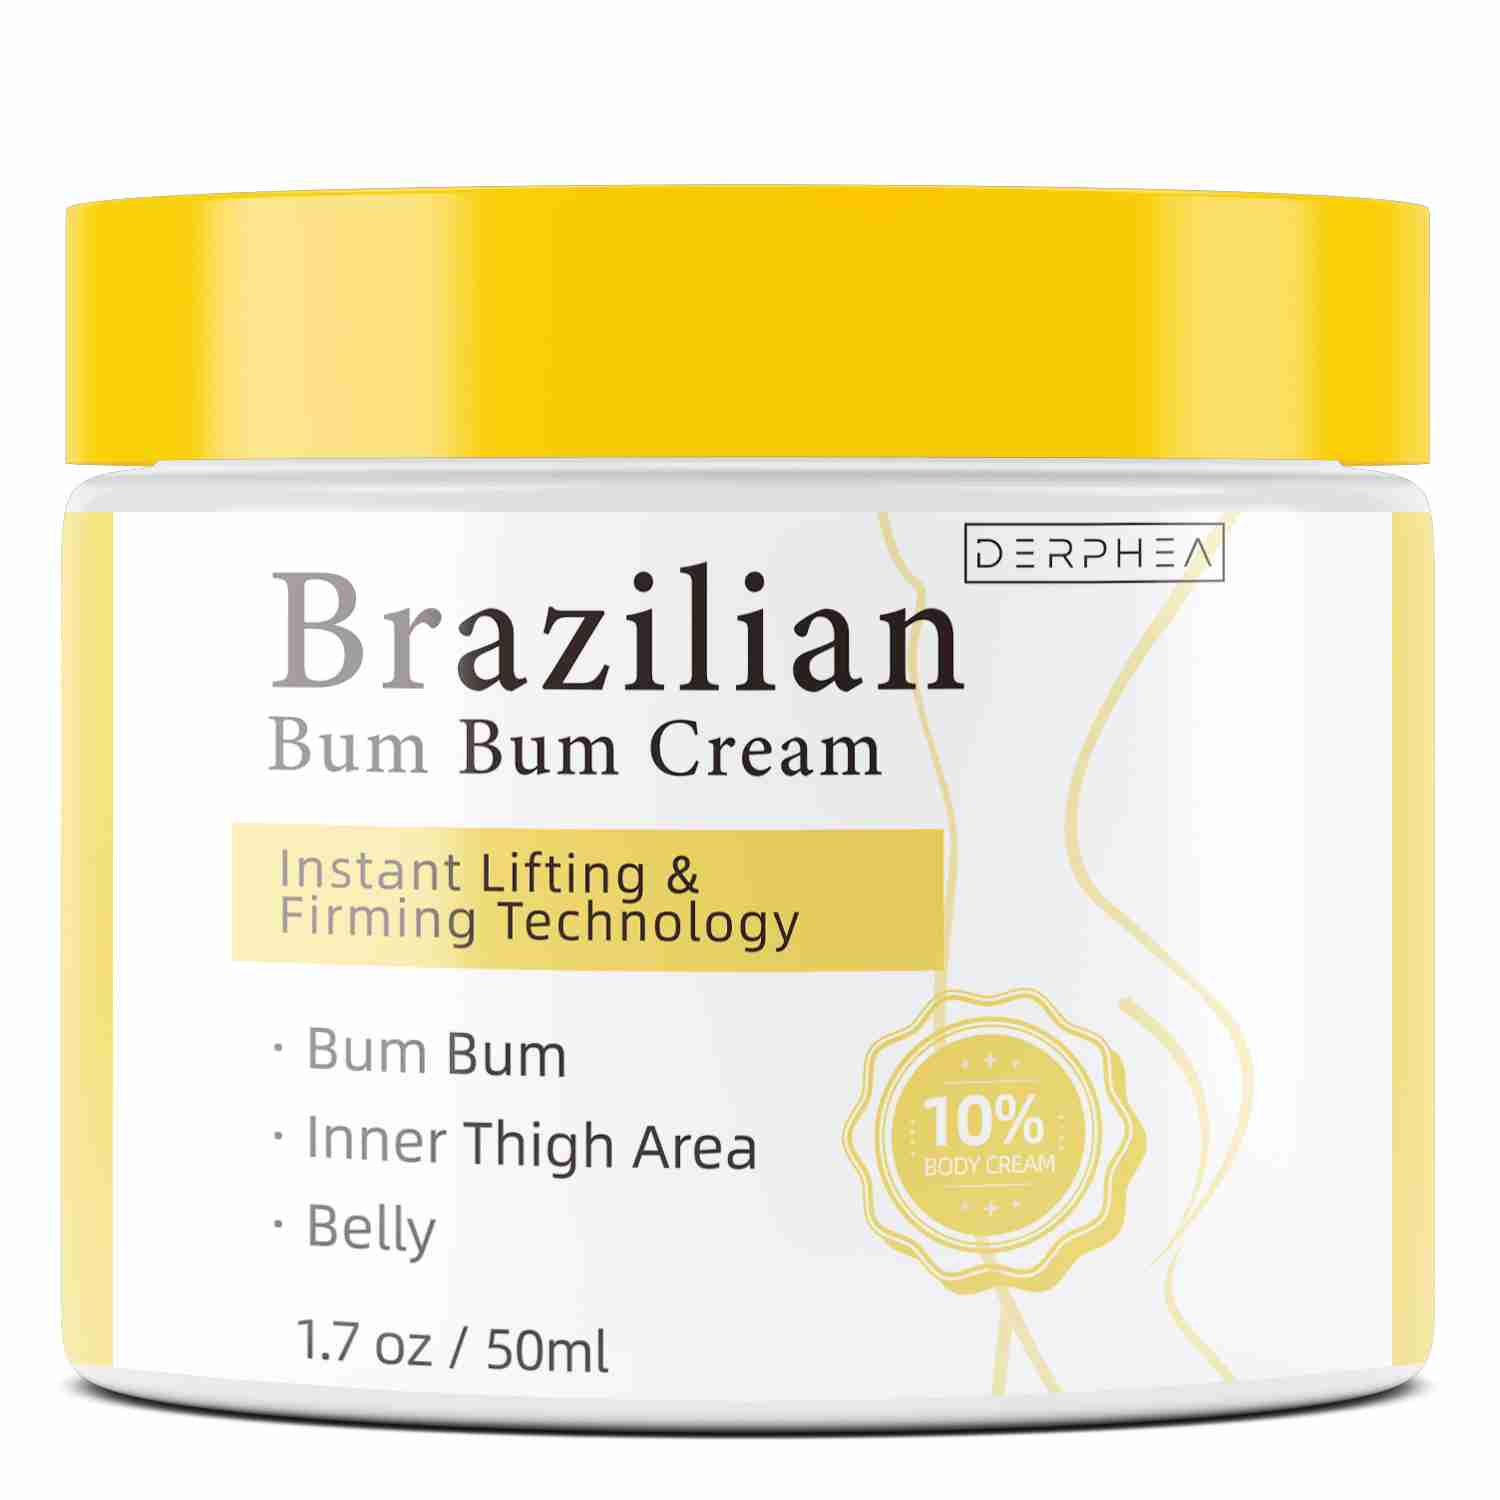 brazilian-bum-bum-cream with cash back rebate